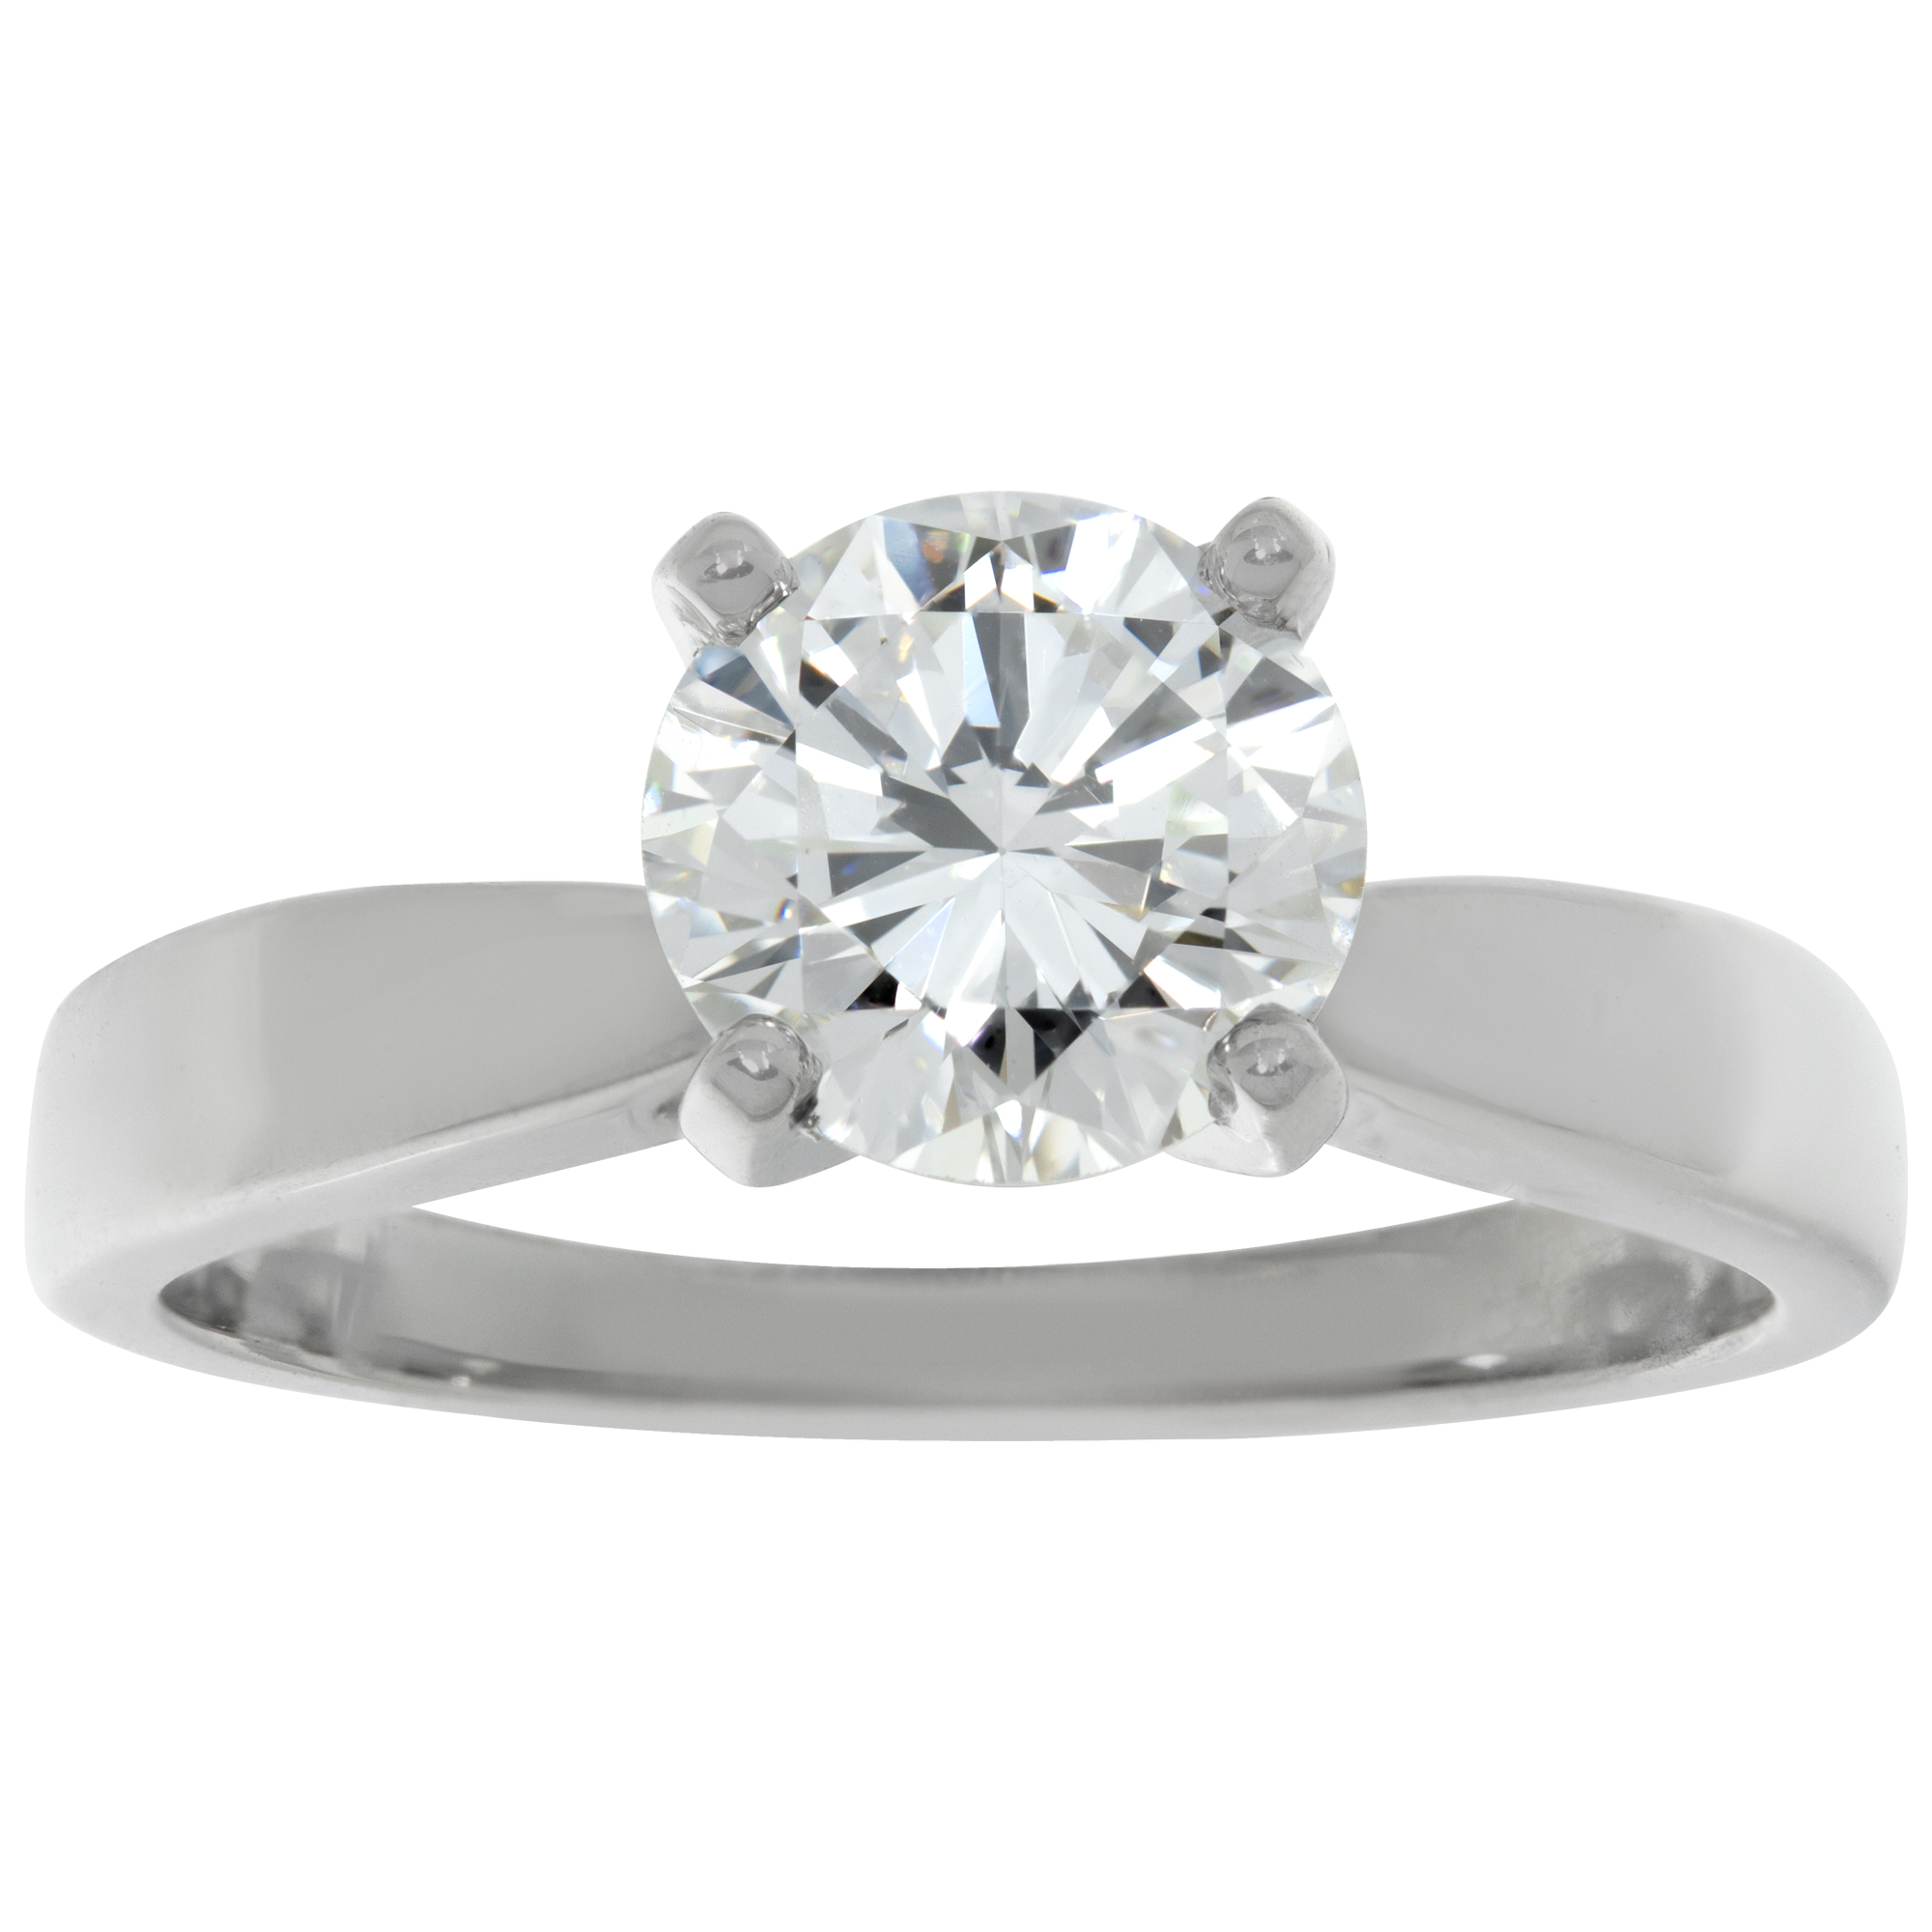 GIA certified round brilliant cut diamond 1.66 carat (G color, VS2 clarity) ring set in platinum image 1